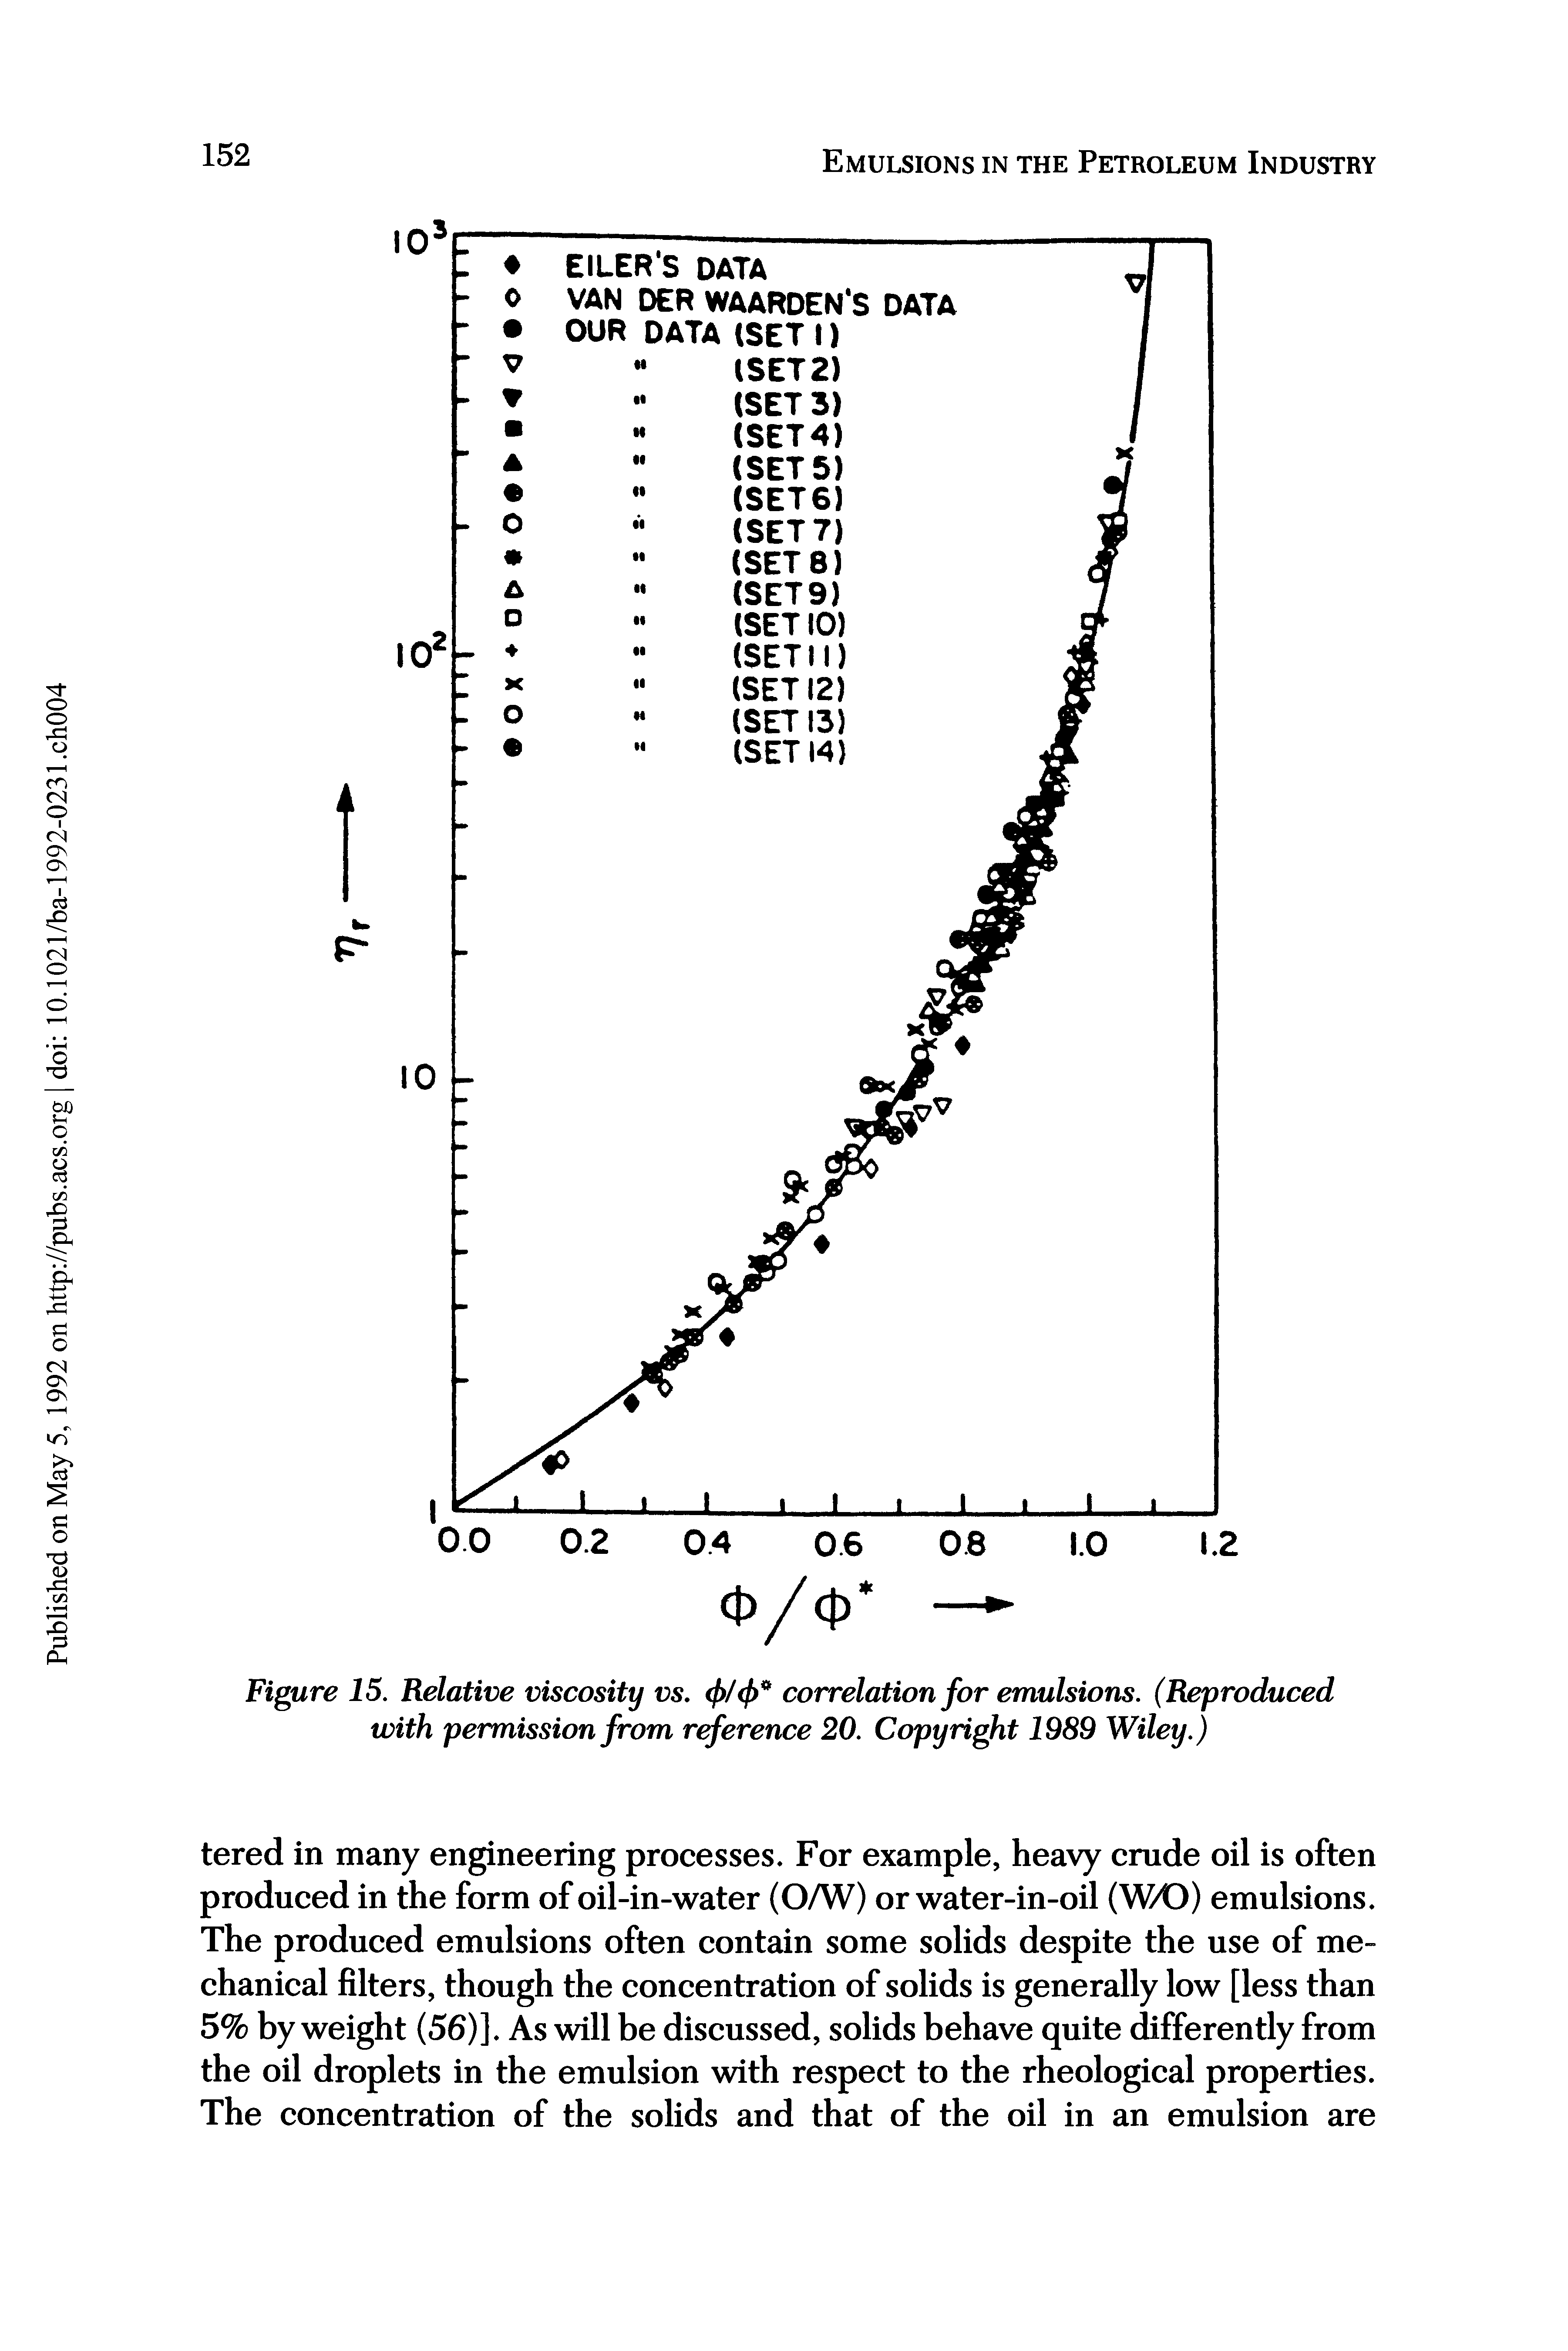 Figure 15. Relative viscosity vs, correlation for emulsions. (Reproduced...